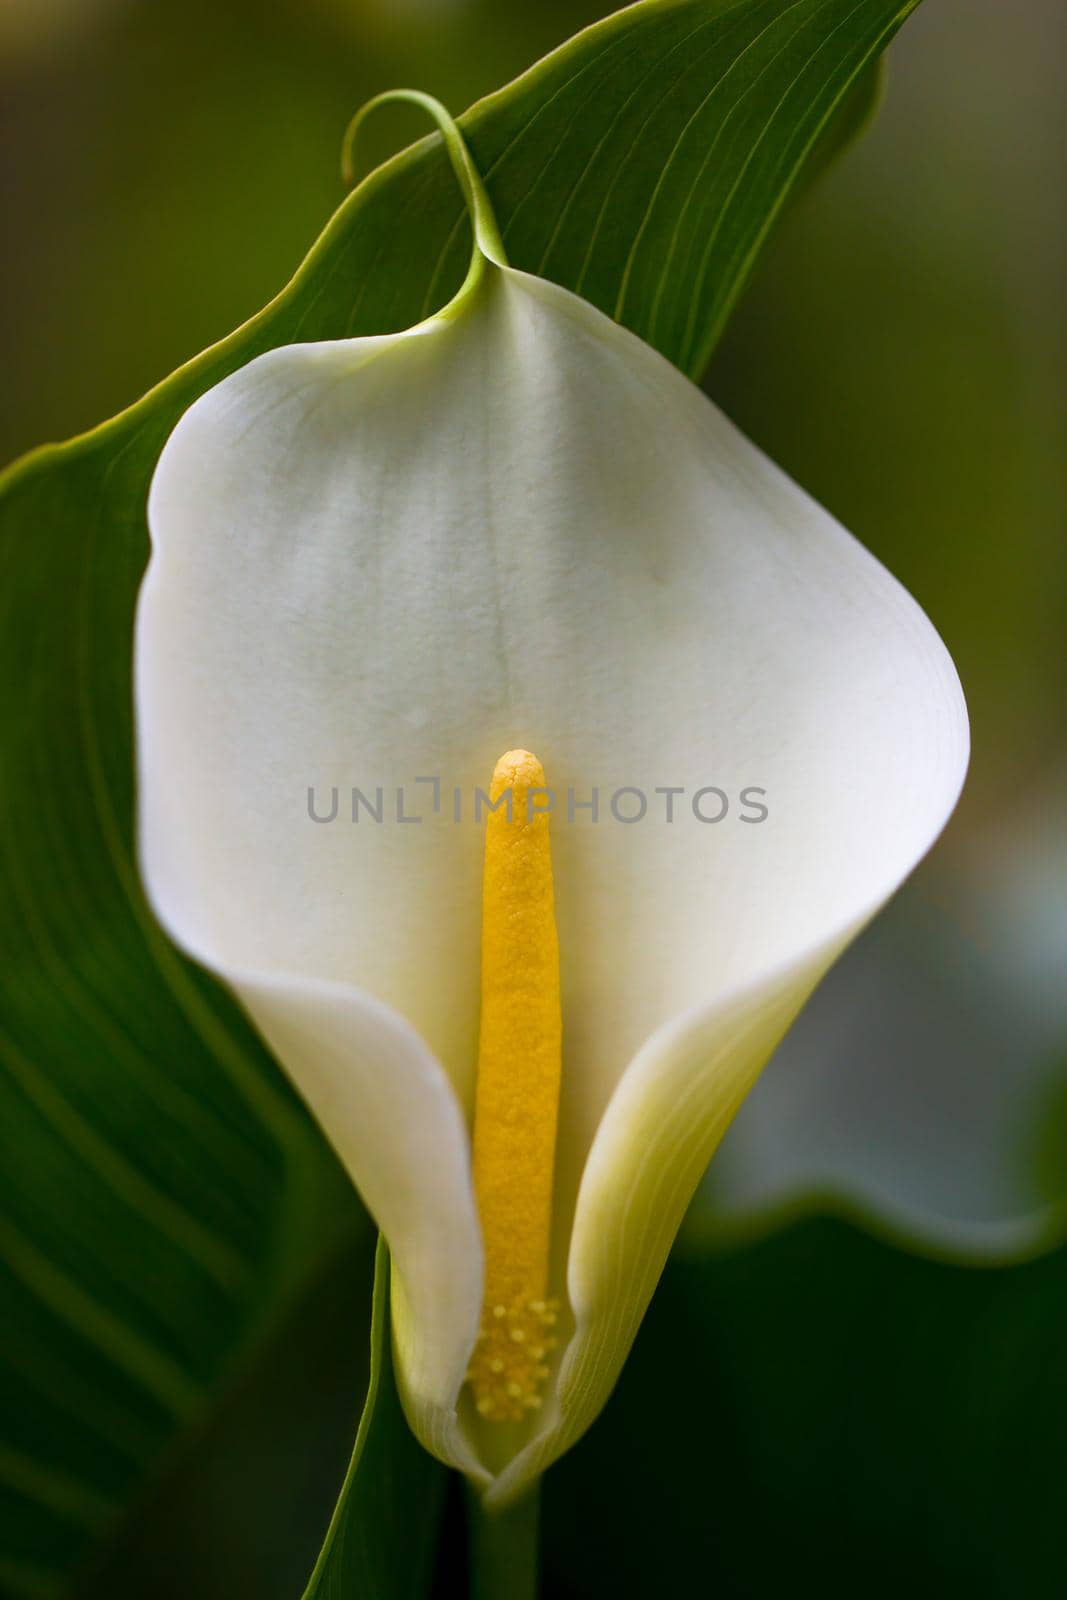 A single elegant lily blossom by magicbones